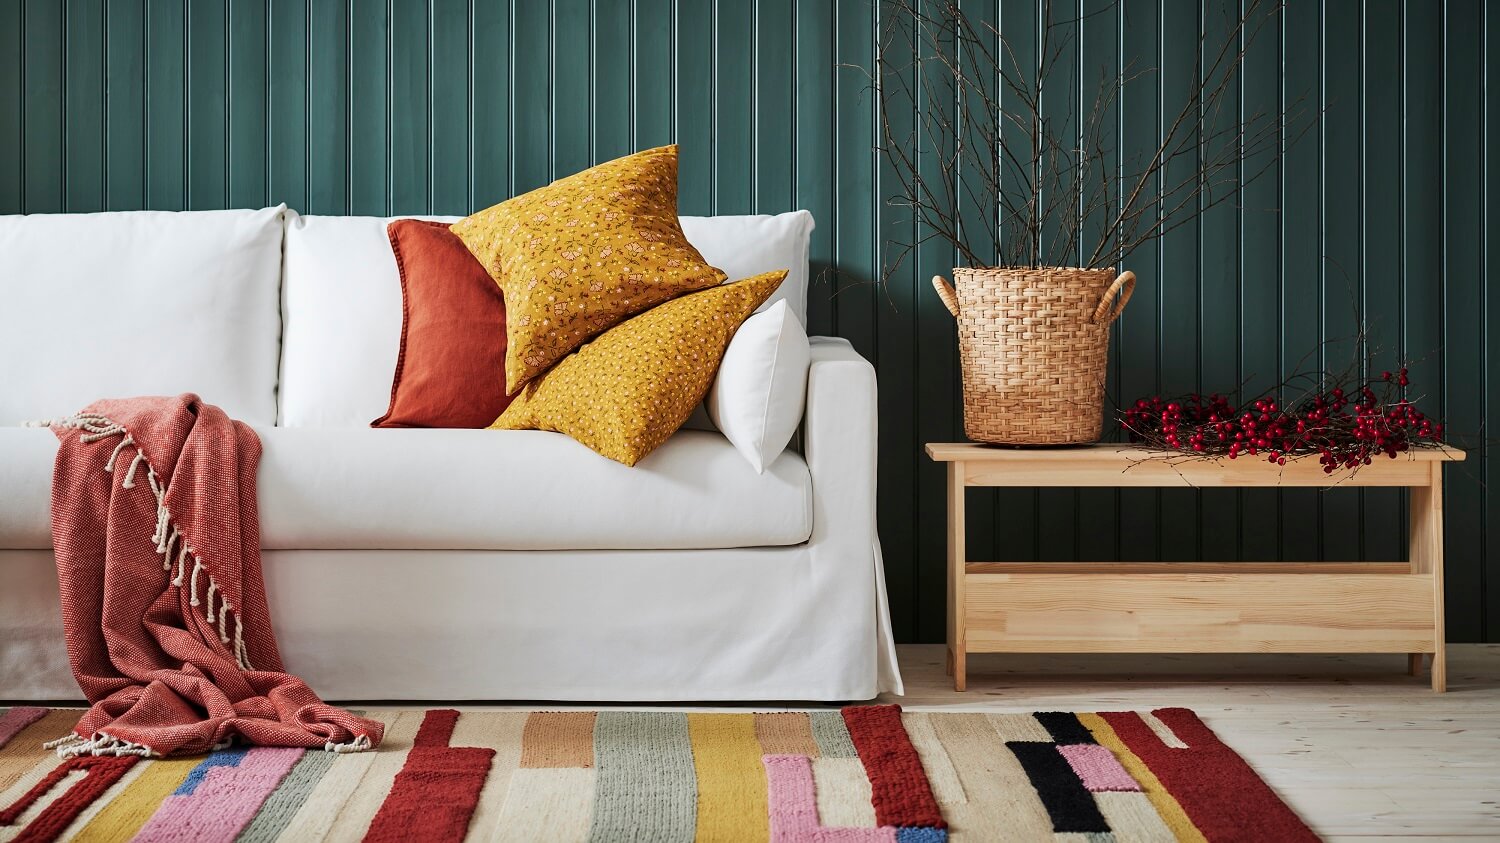 IKEA_HYLTARP_sofa-colorful-textiles-nordroom